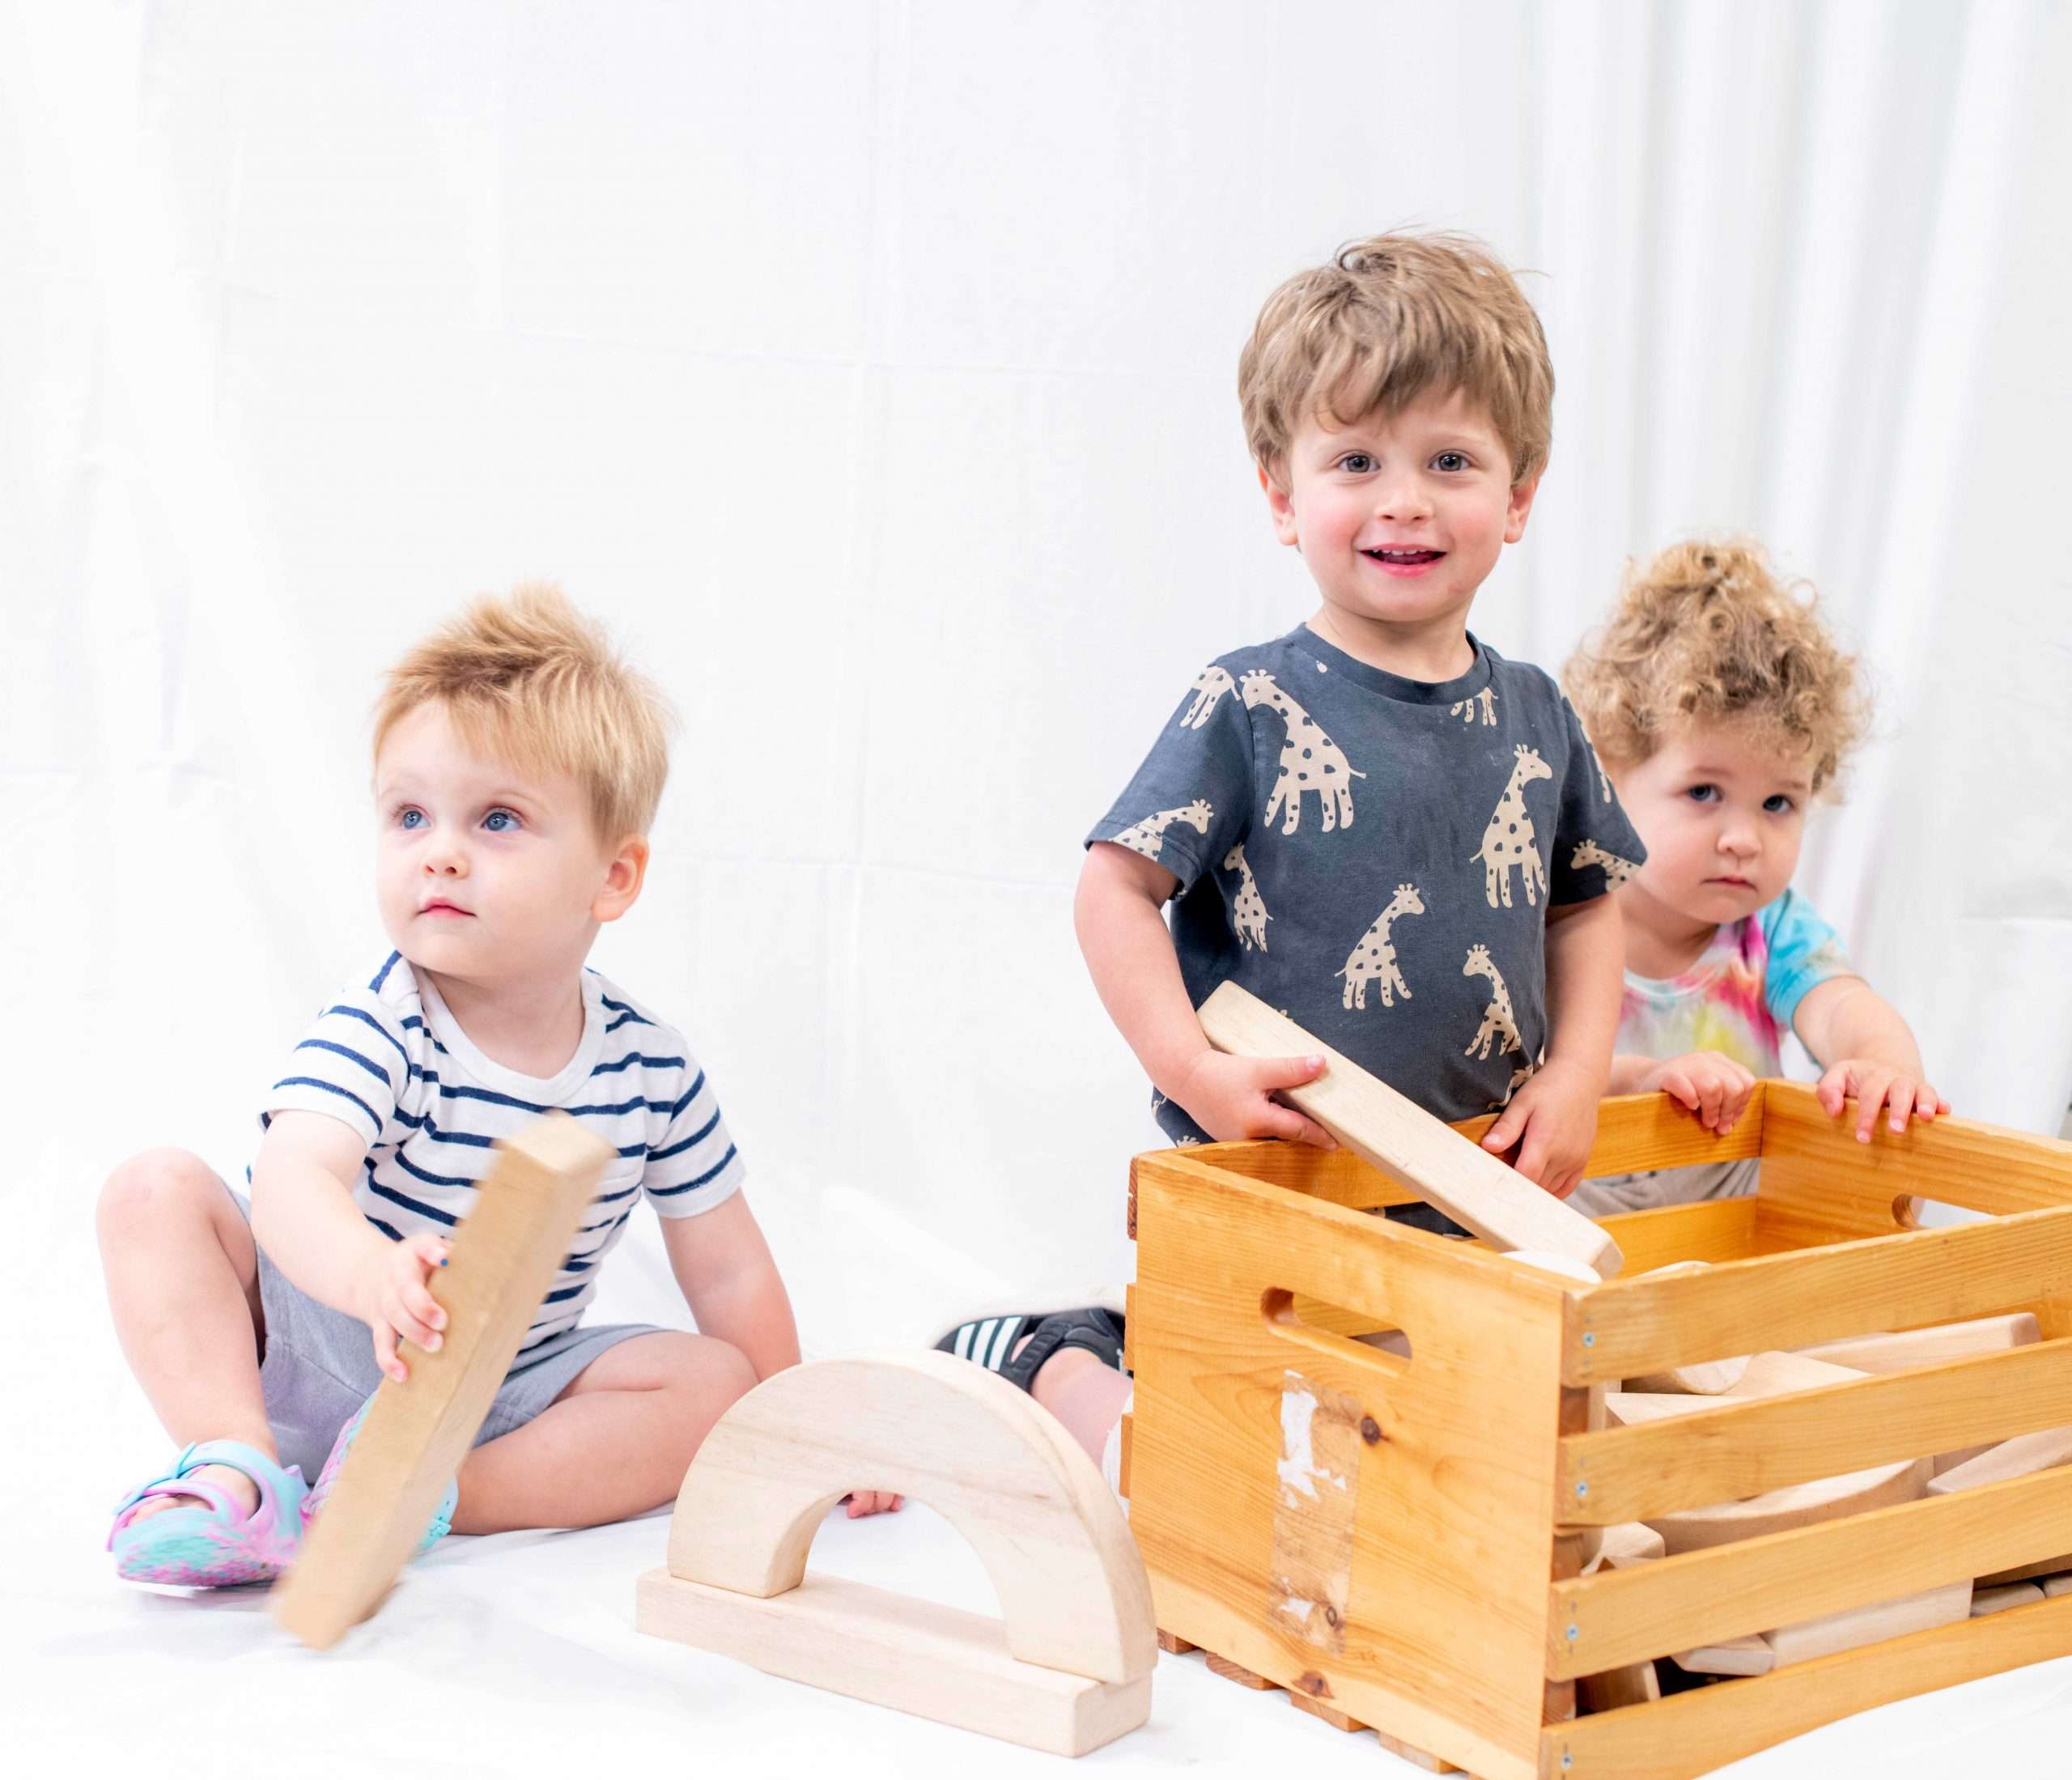 wicker-park-3-children-playing-with-blocks